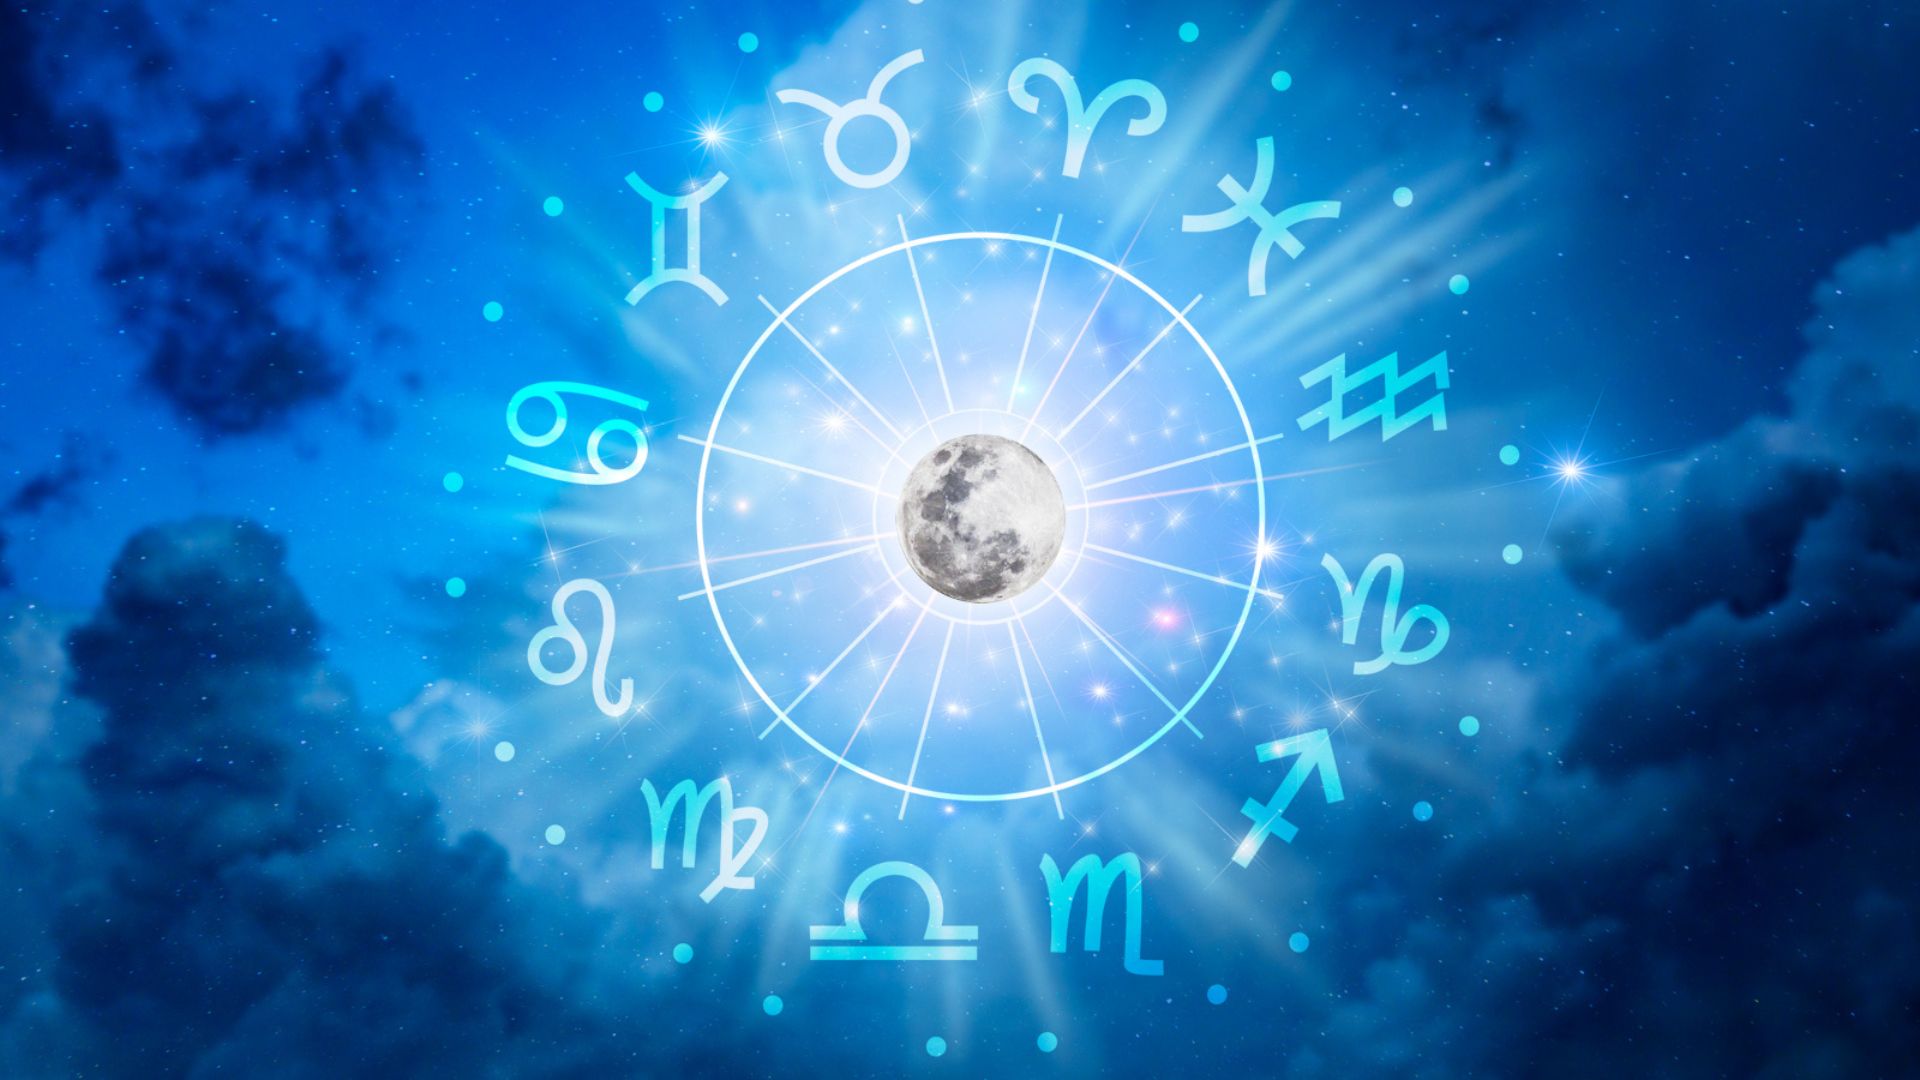 Zodiac Signs Around A Moon